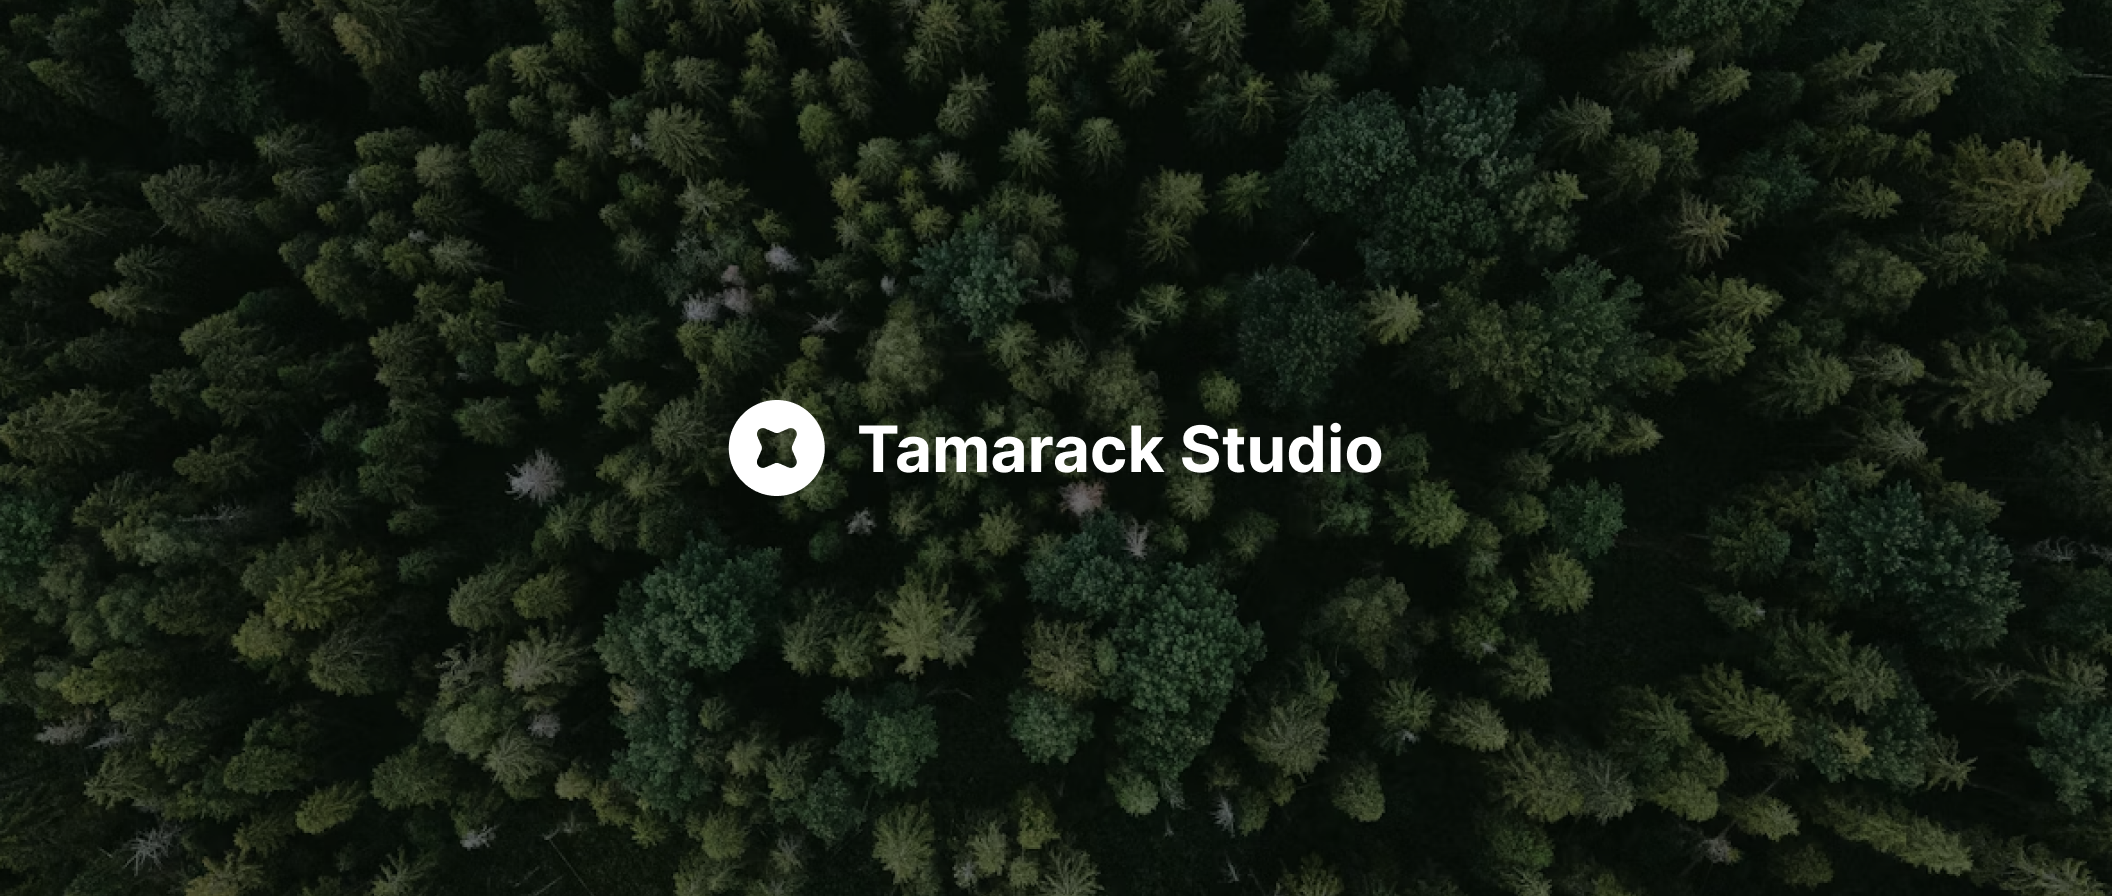 Tamarack Studio